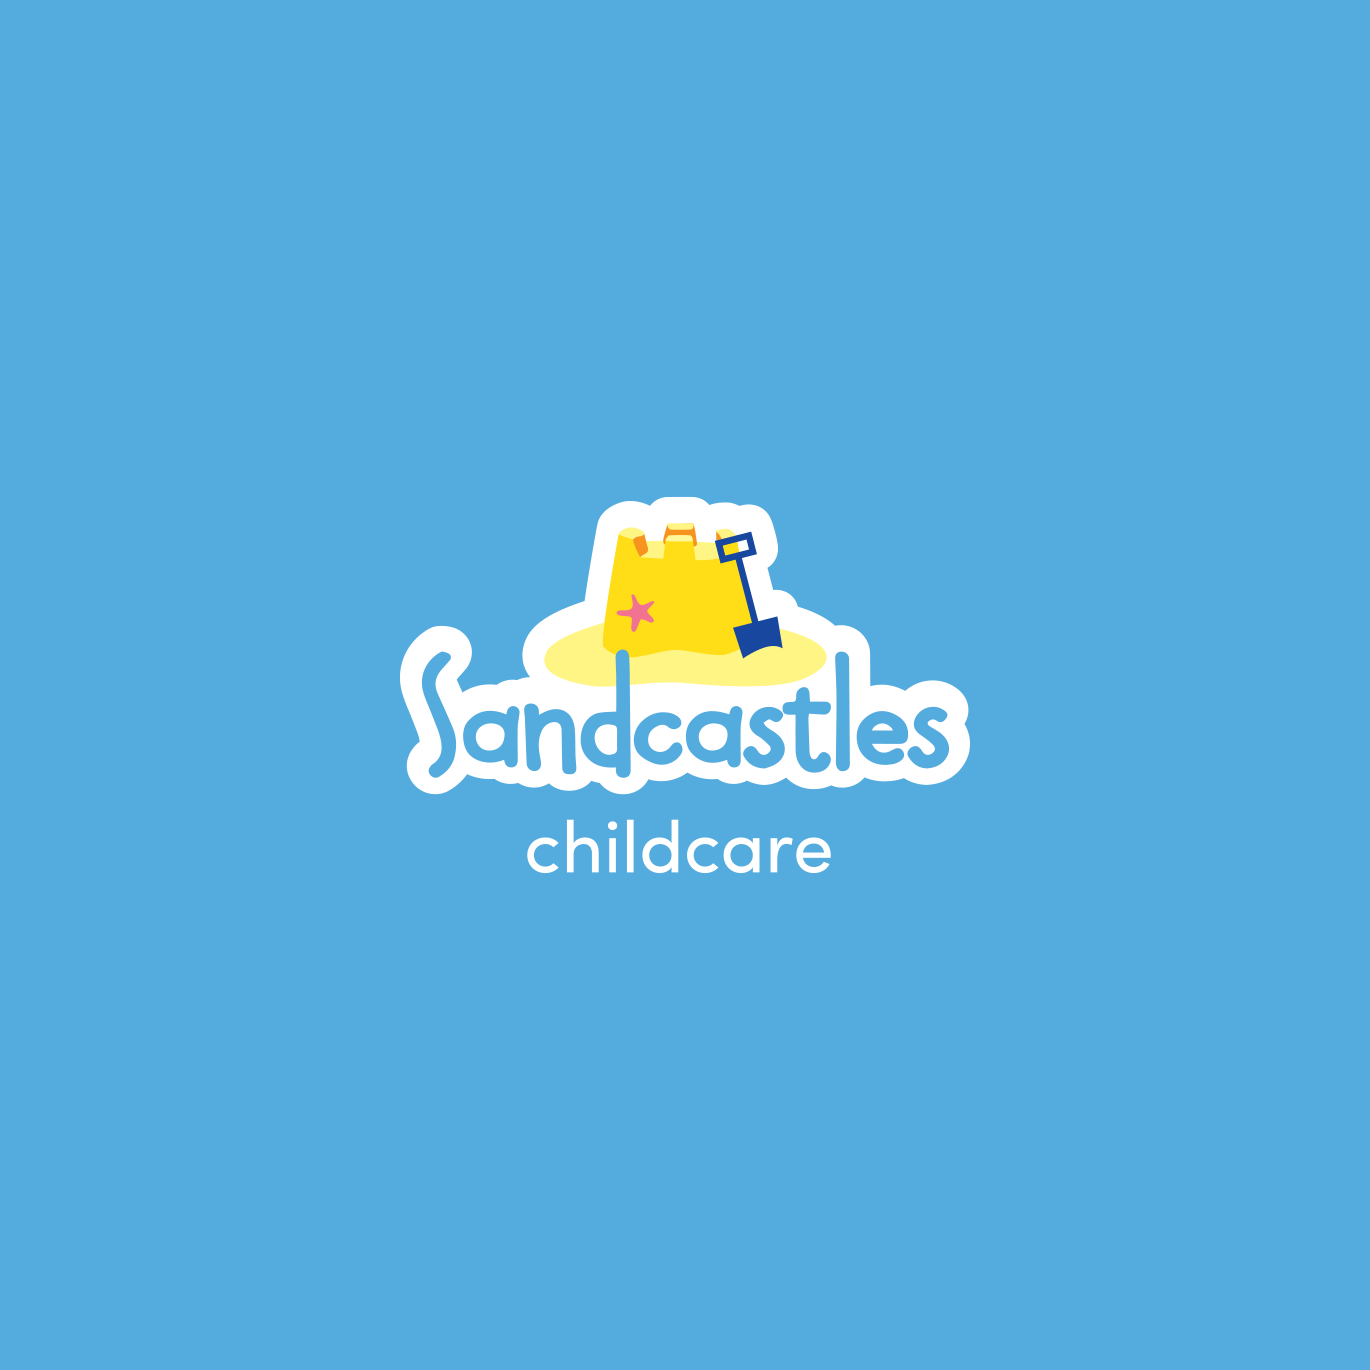 Sandcastles Childcare Logo